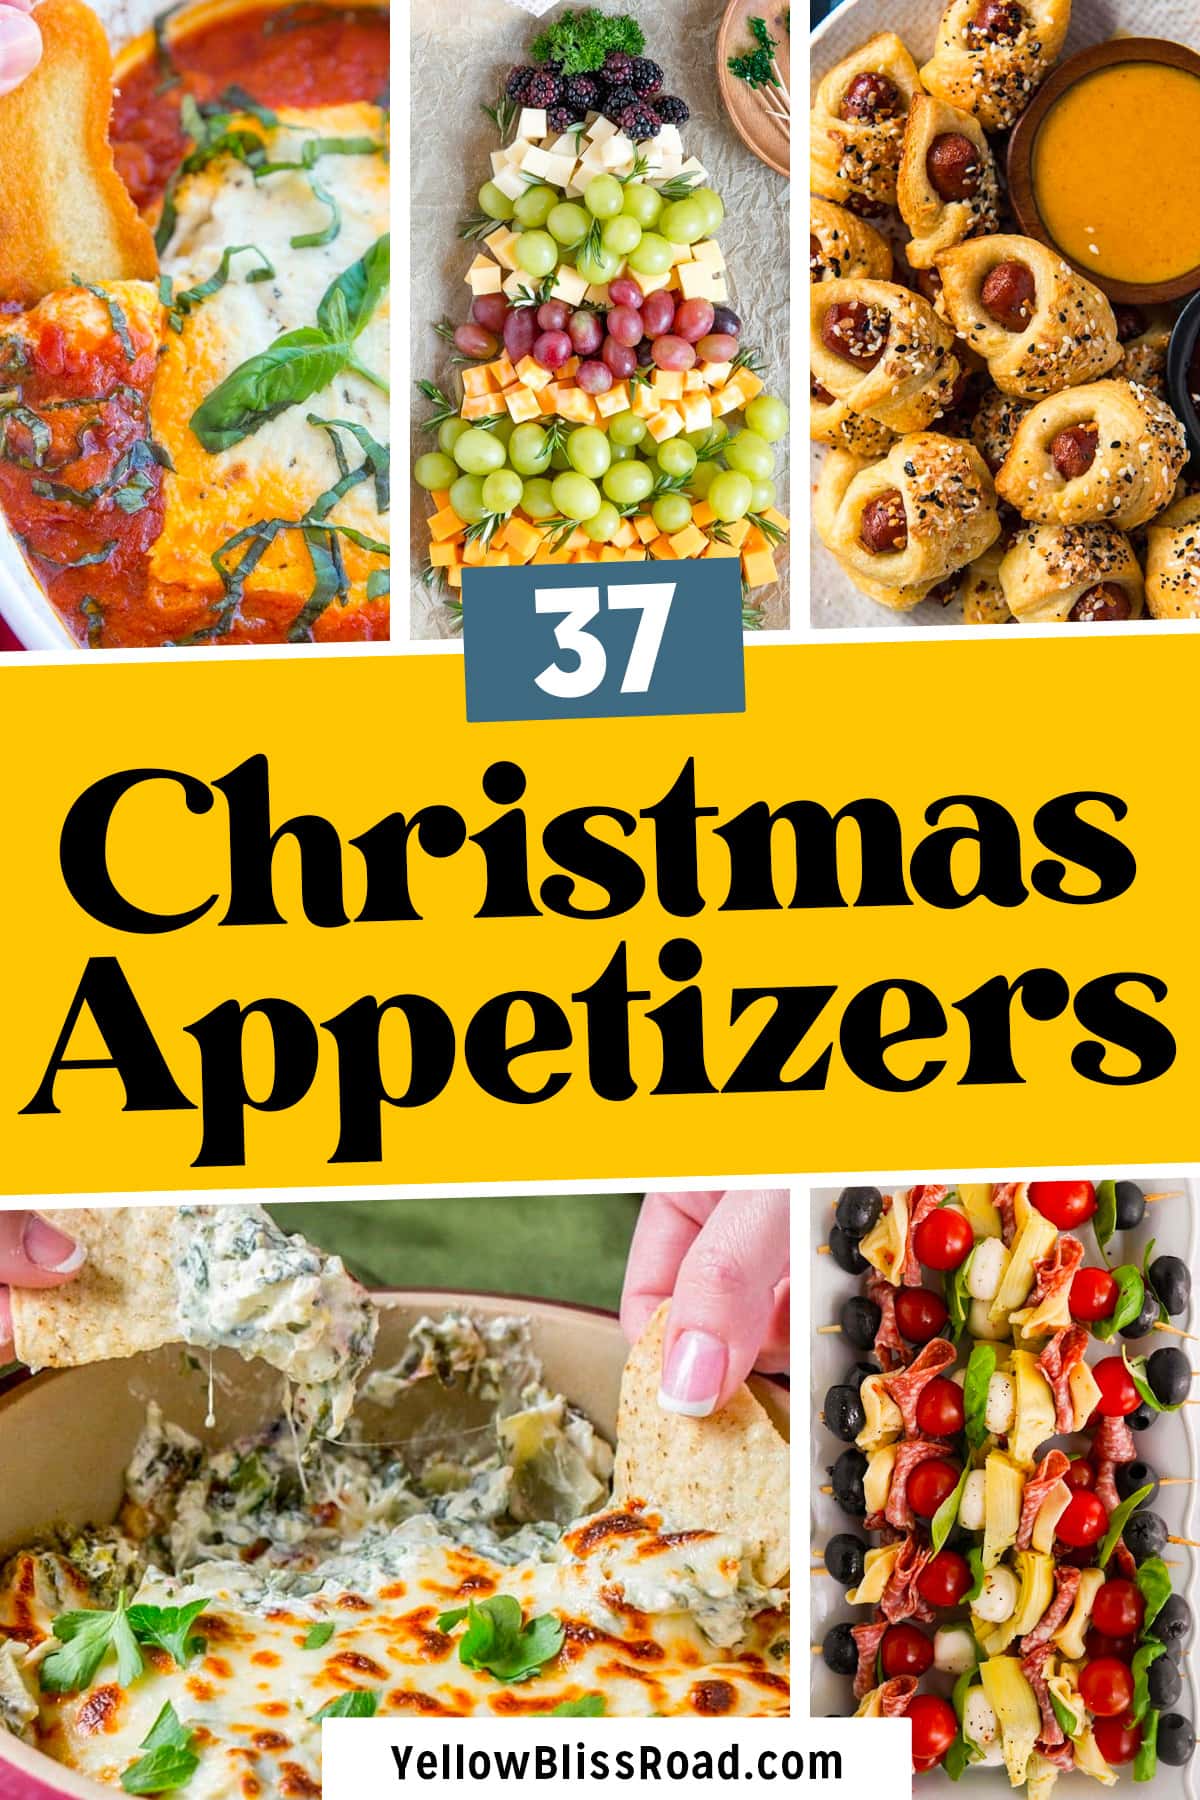 37 Christmas Crockpot Recipes